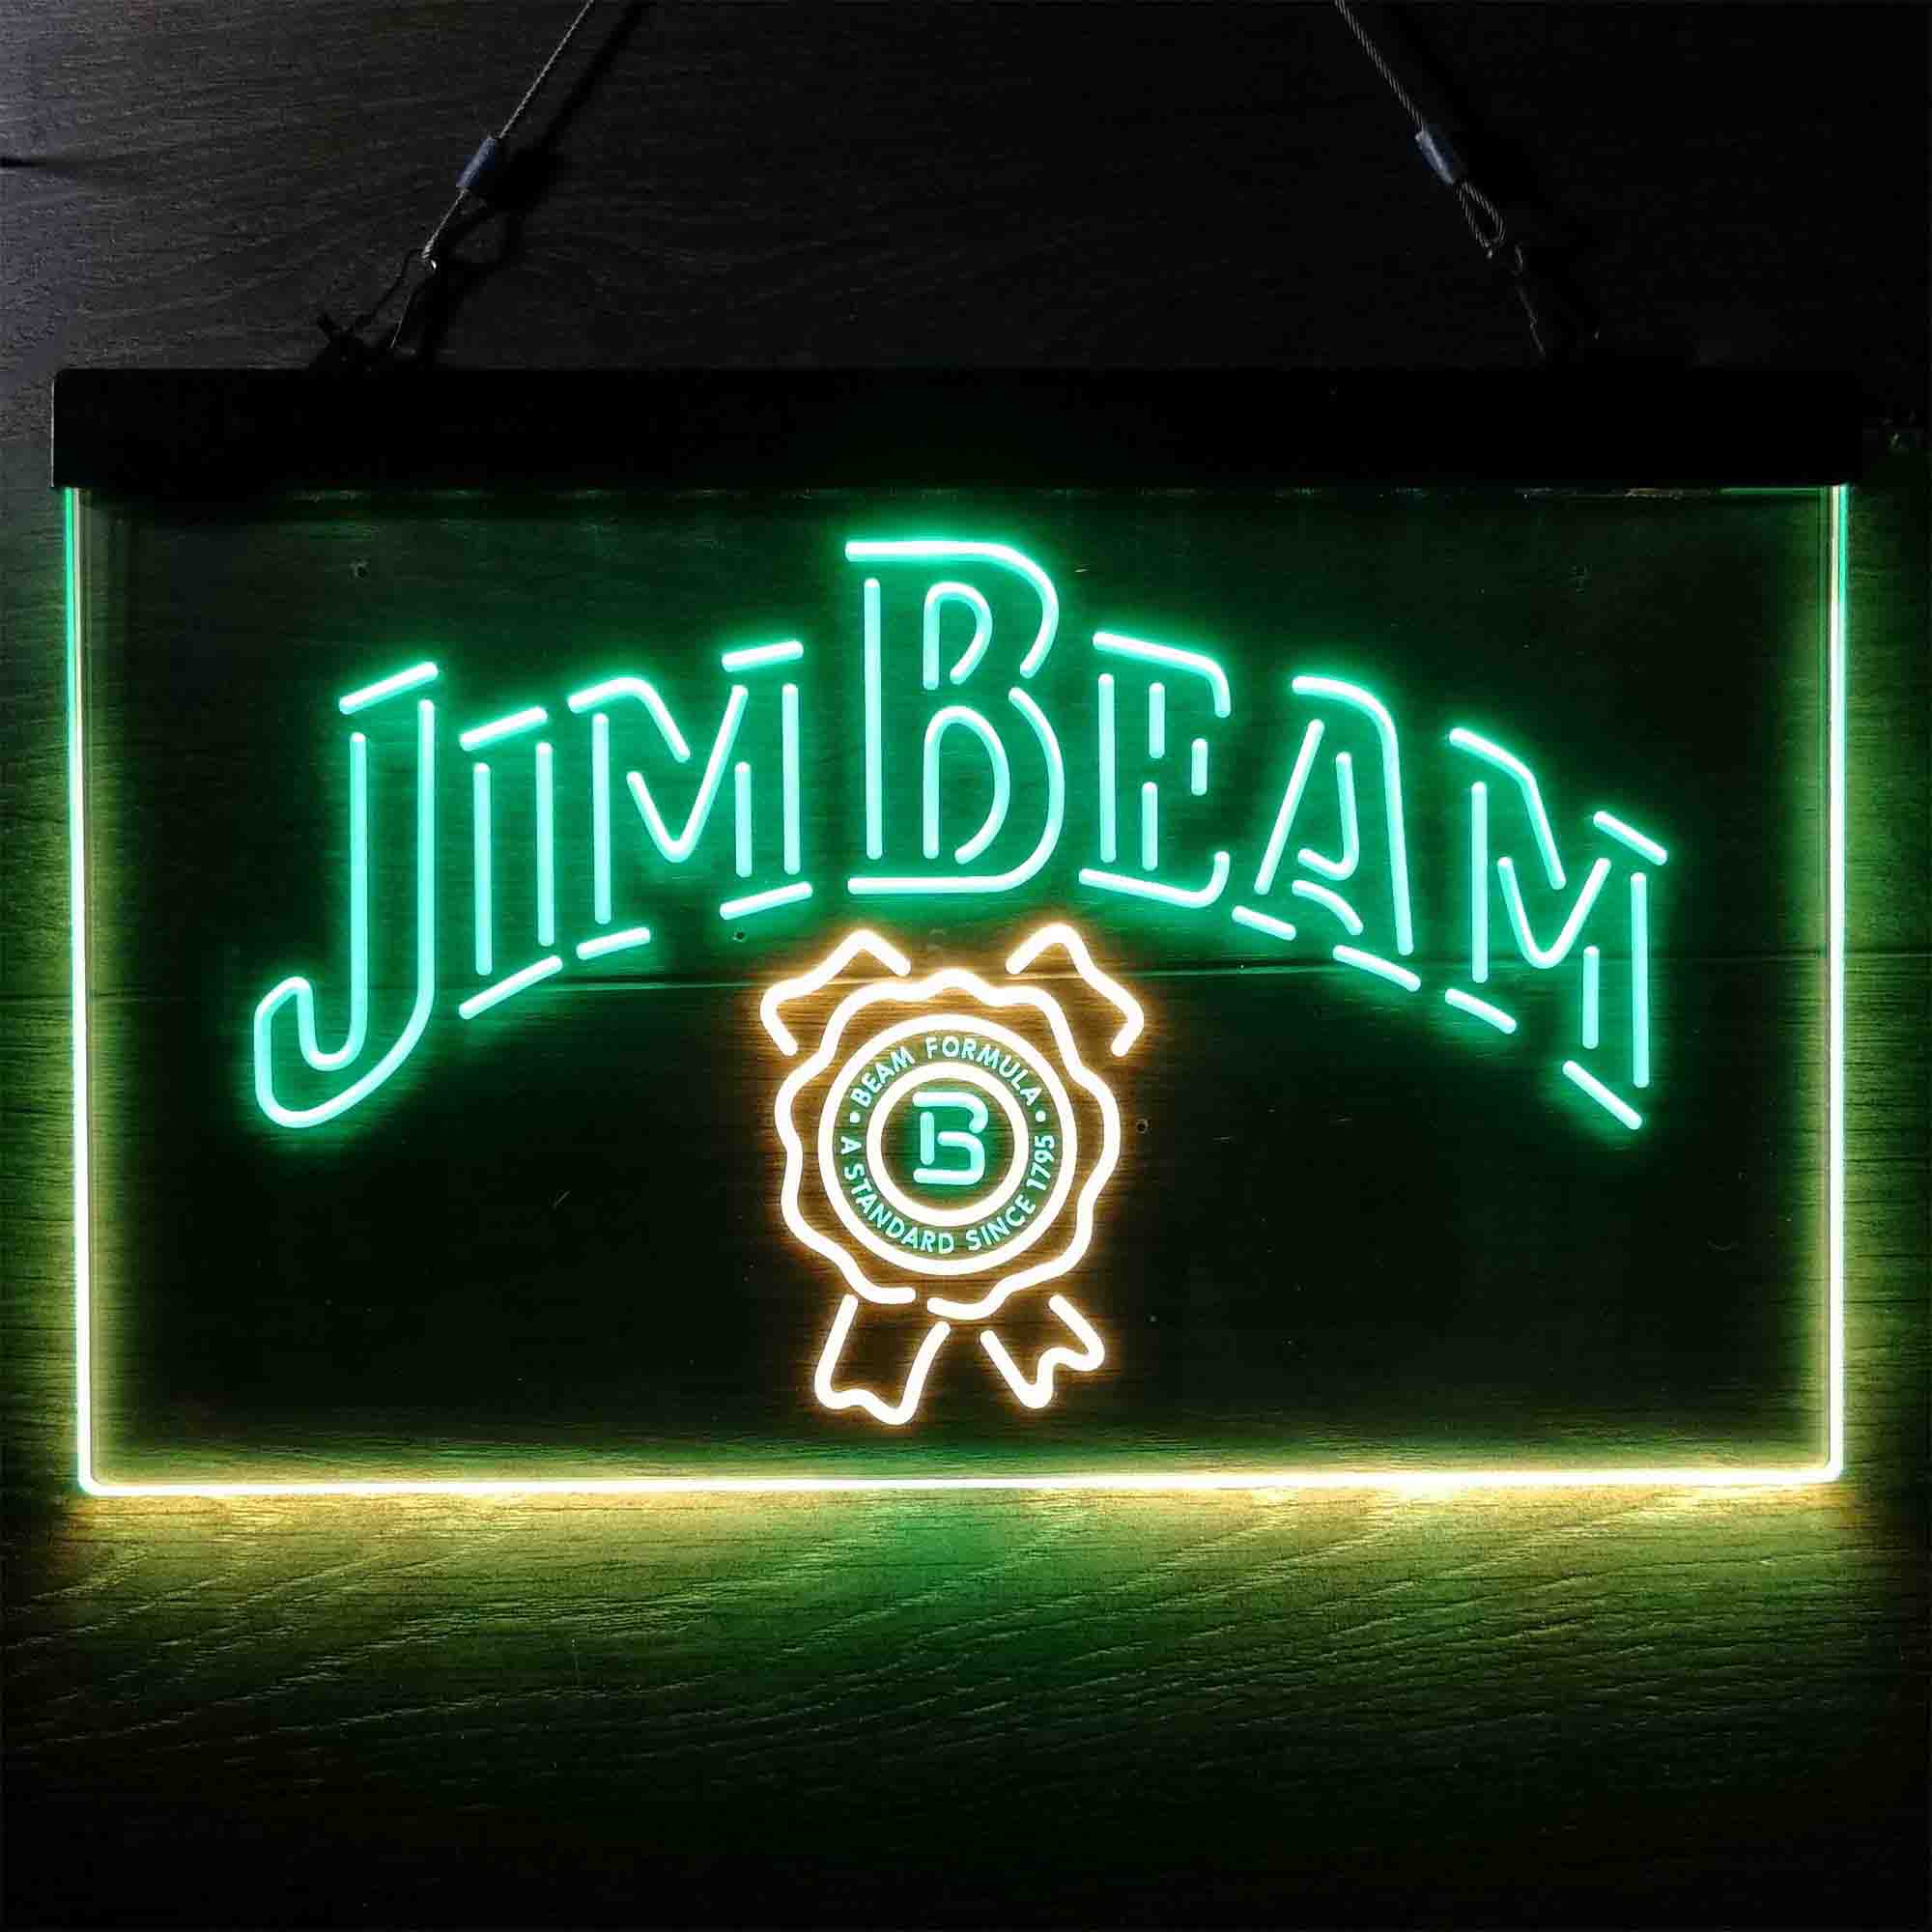 Jim Beam Beer Neon-Like LED Sign